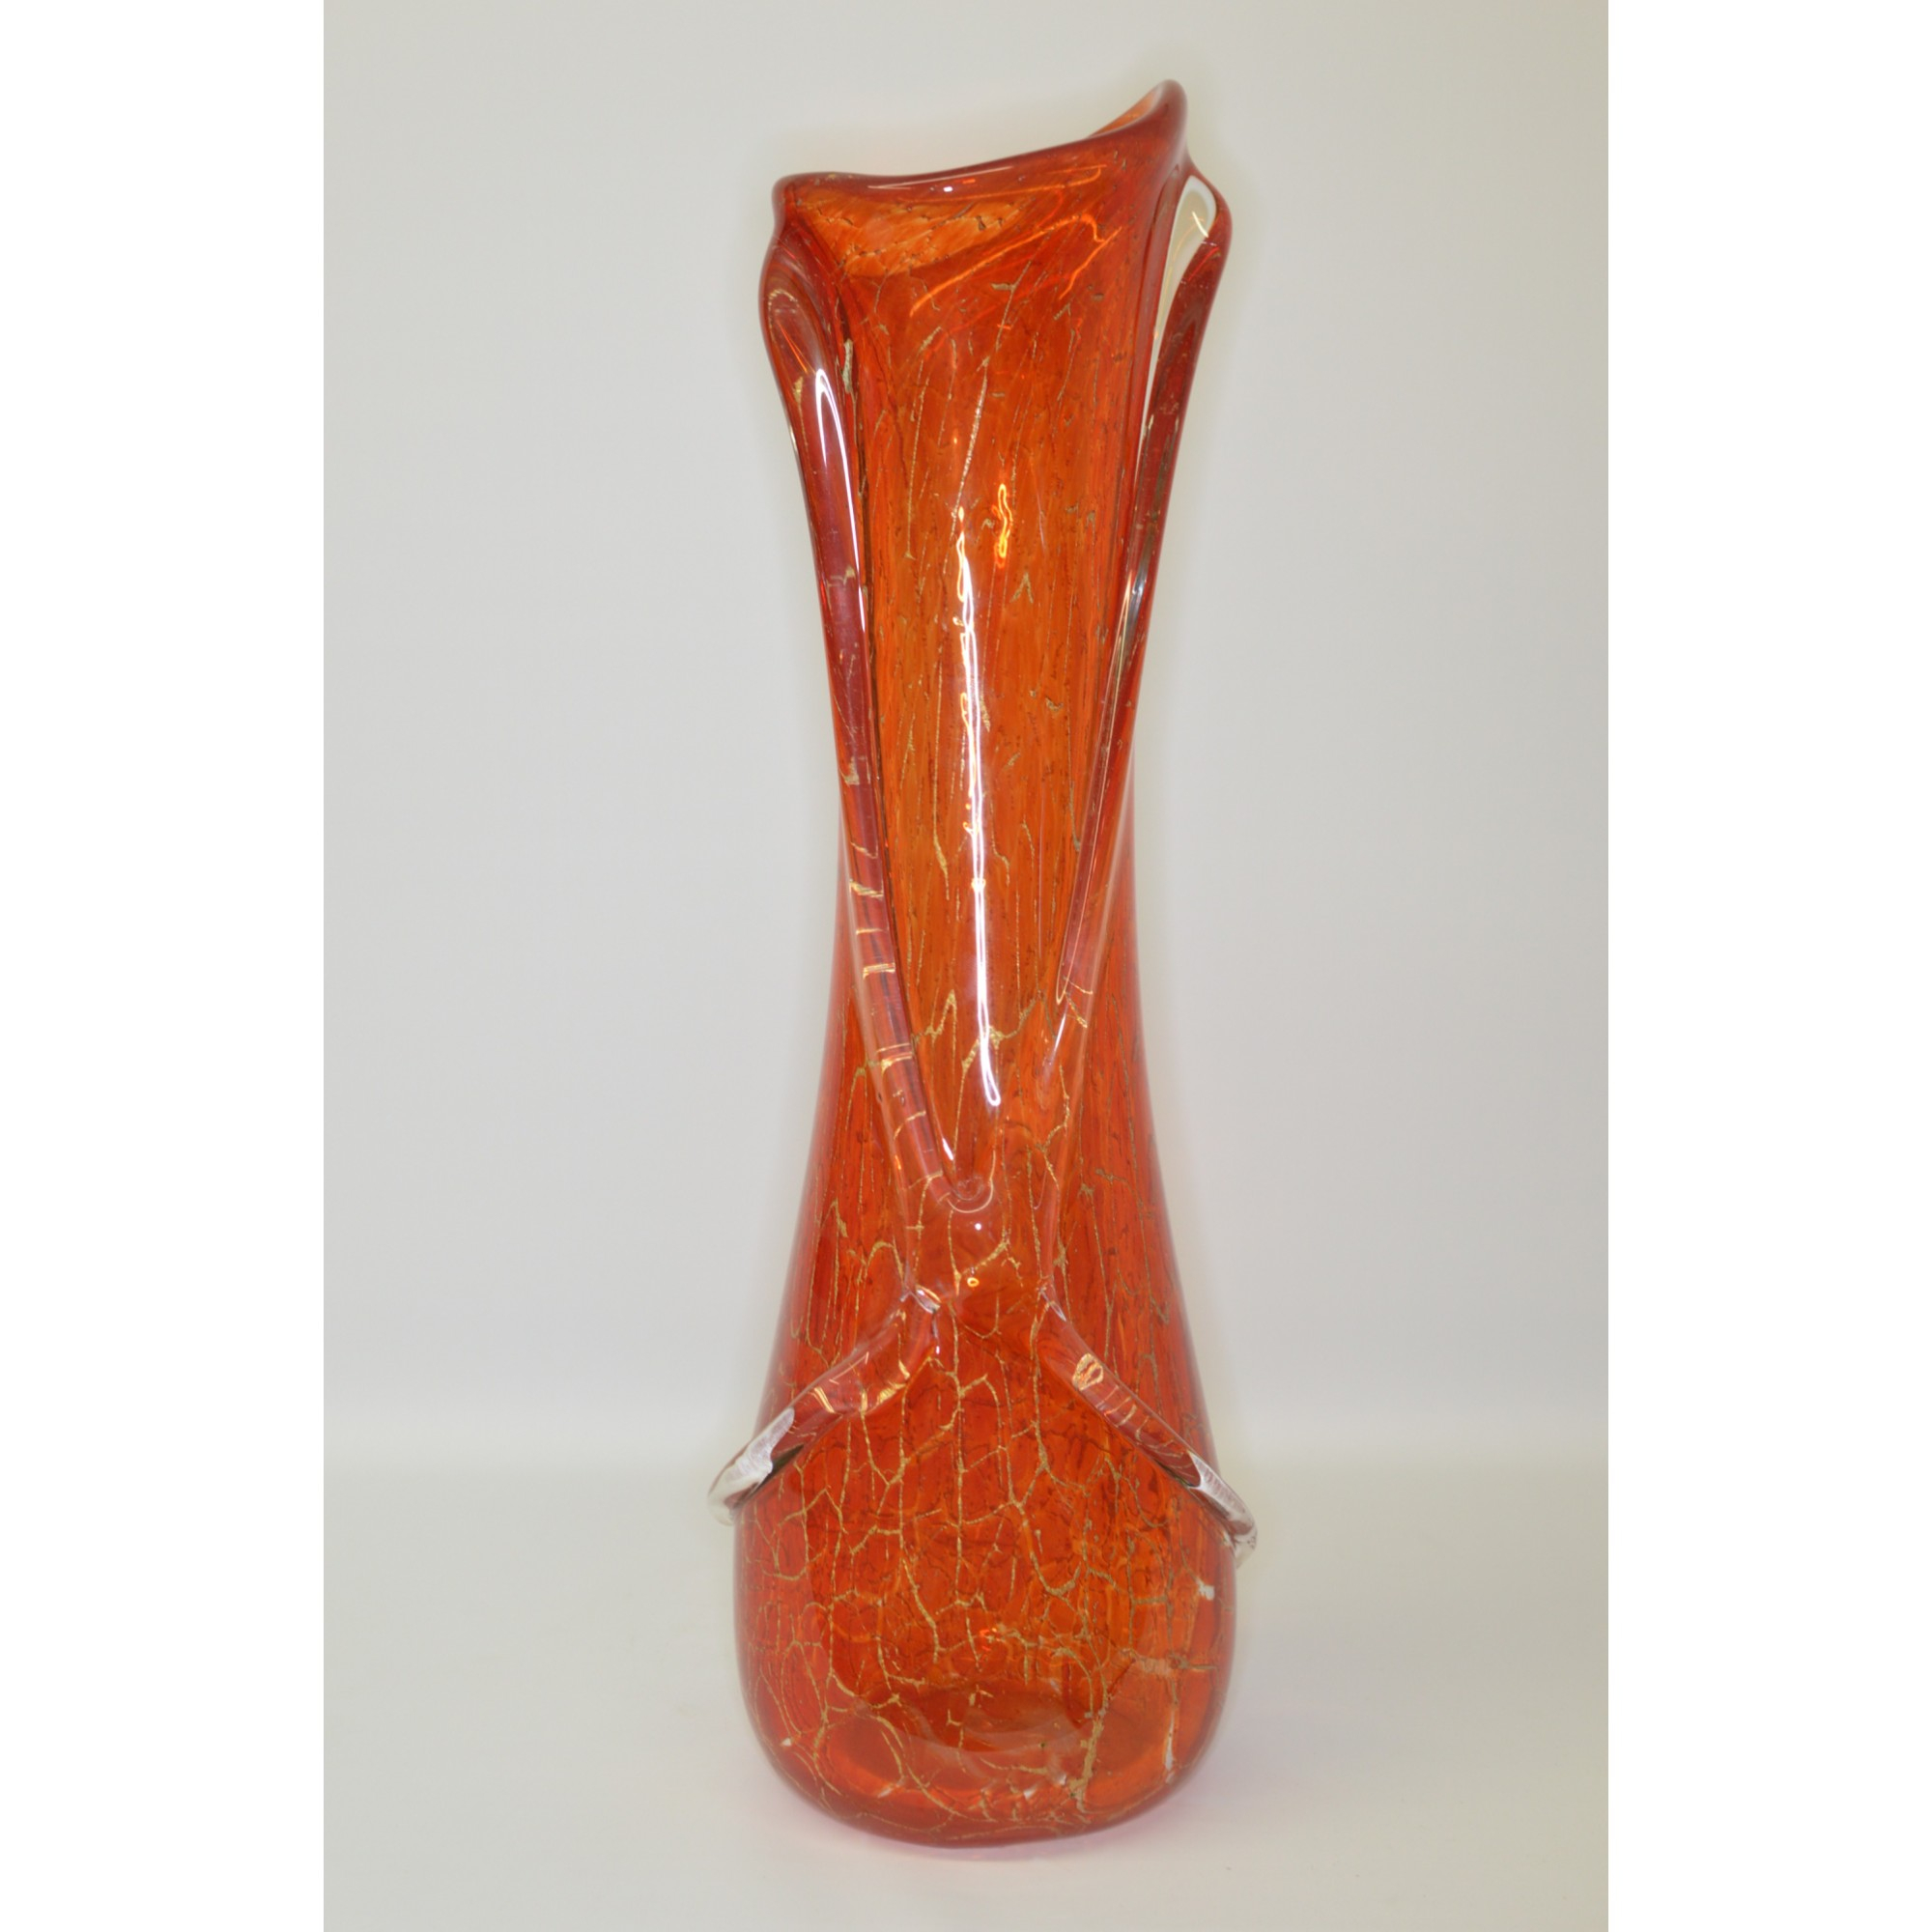 Tall Floor Vase Suspenders Deep Orange With A Golden Spiderweb Collection Coral H 80 Cm 31 regarding dimensions 2000 X 2000